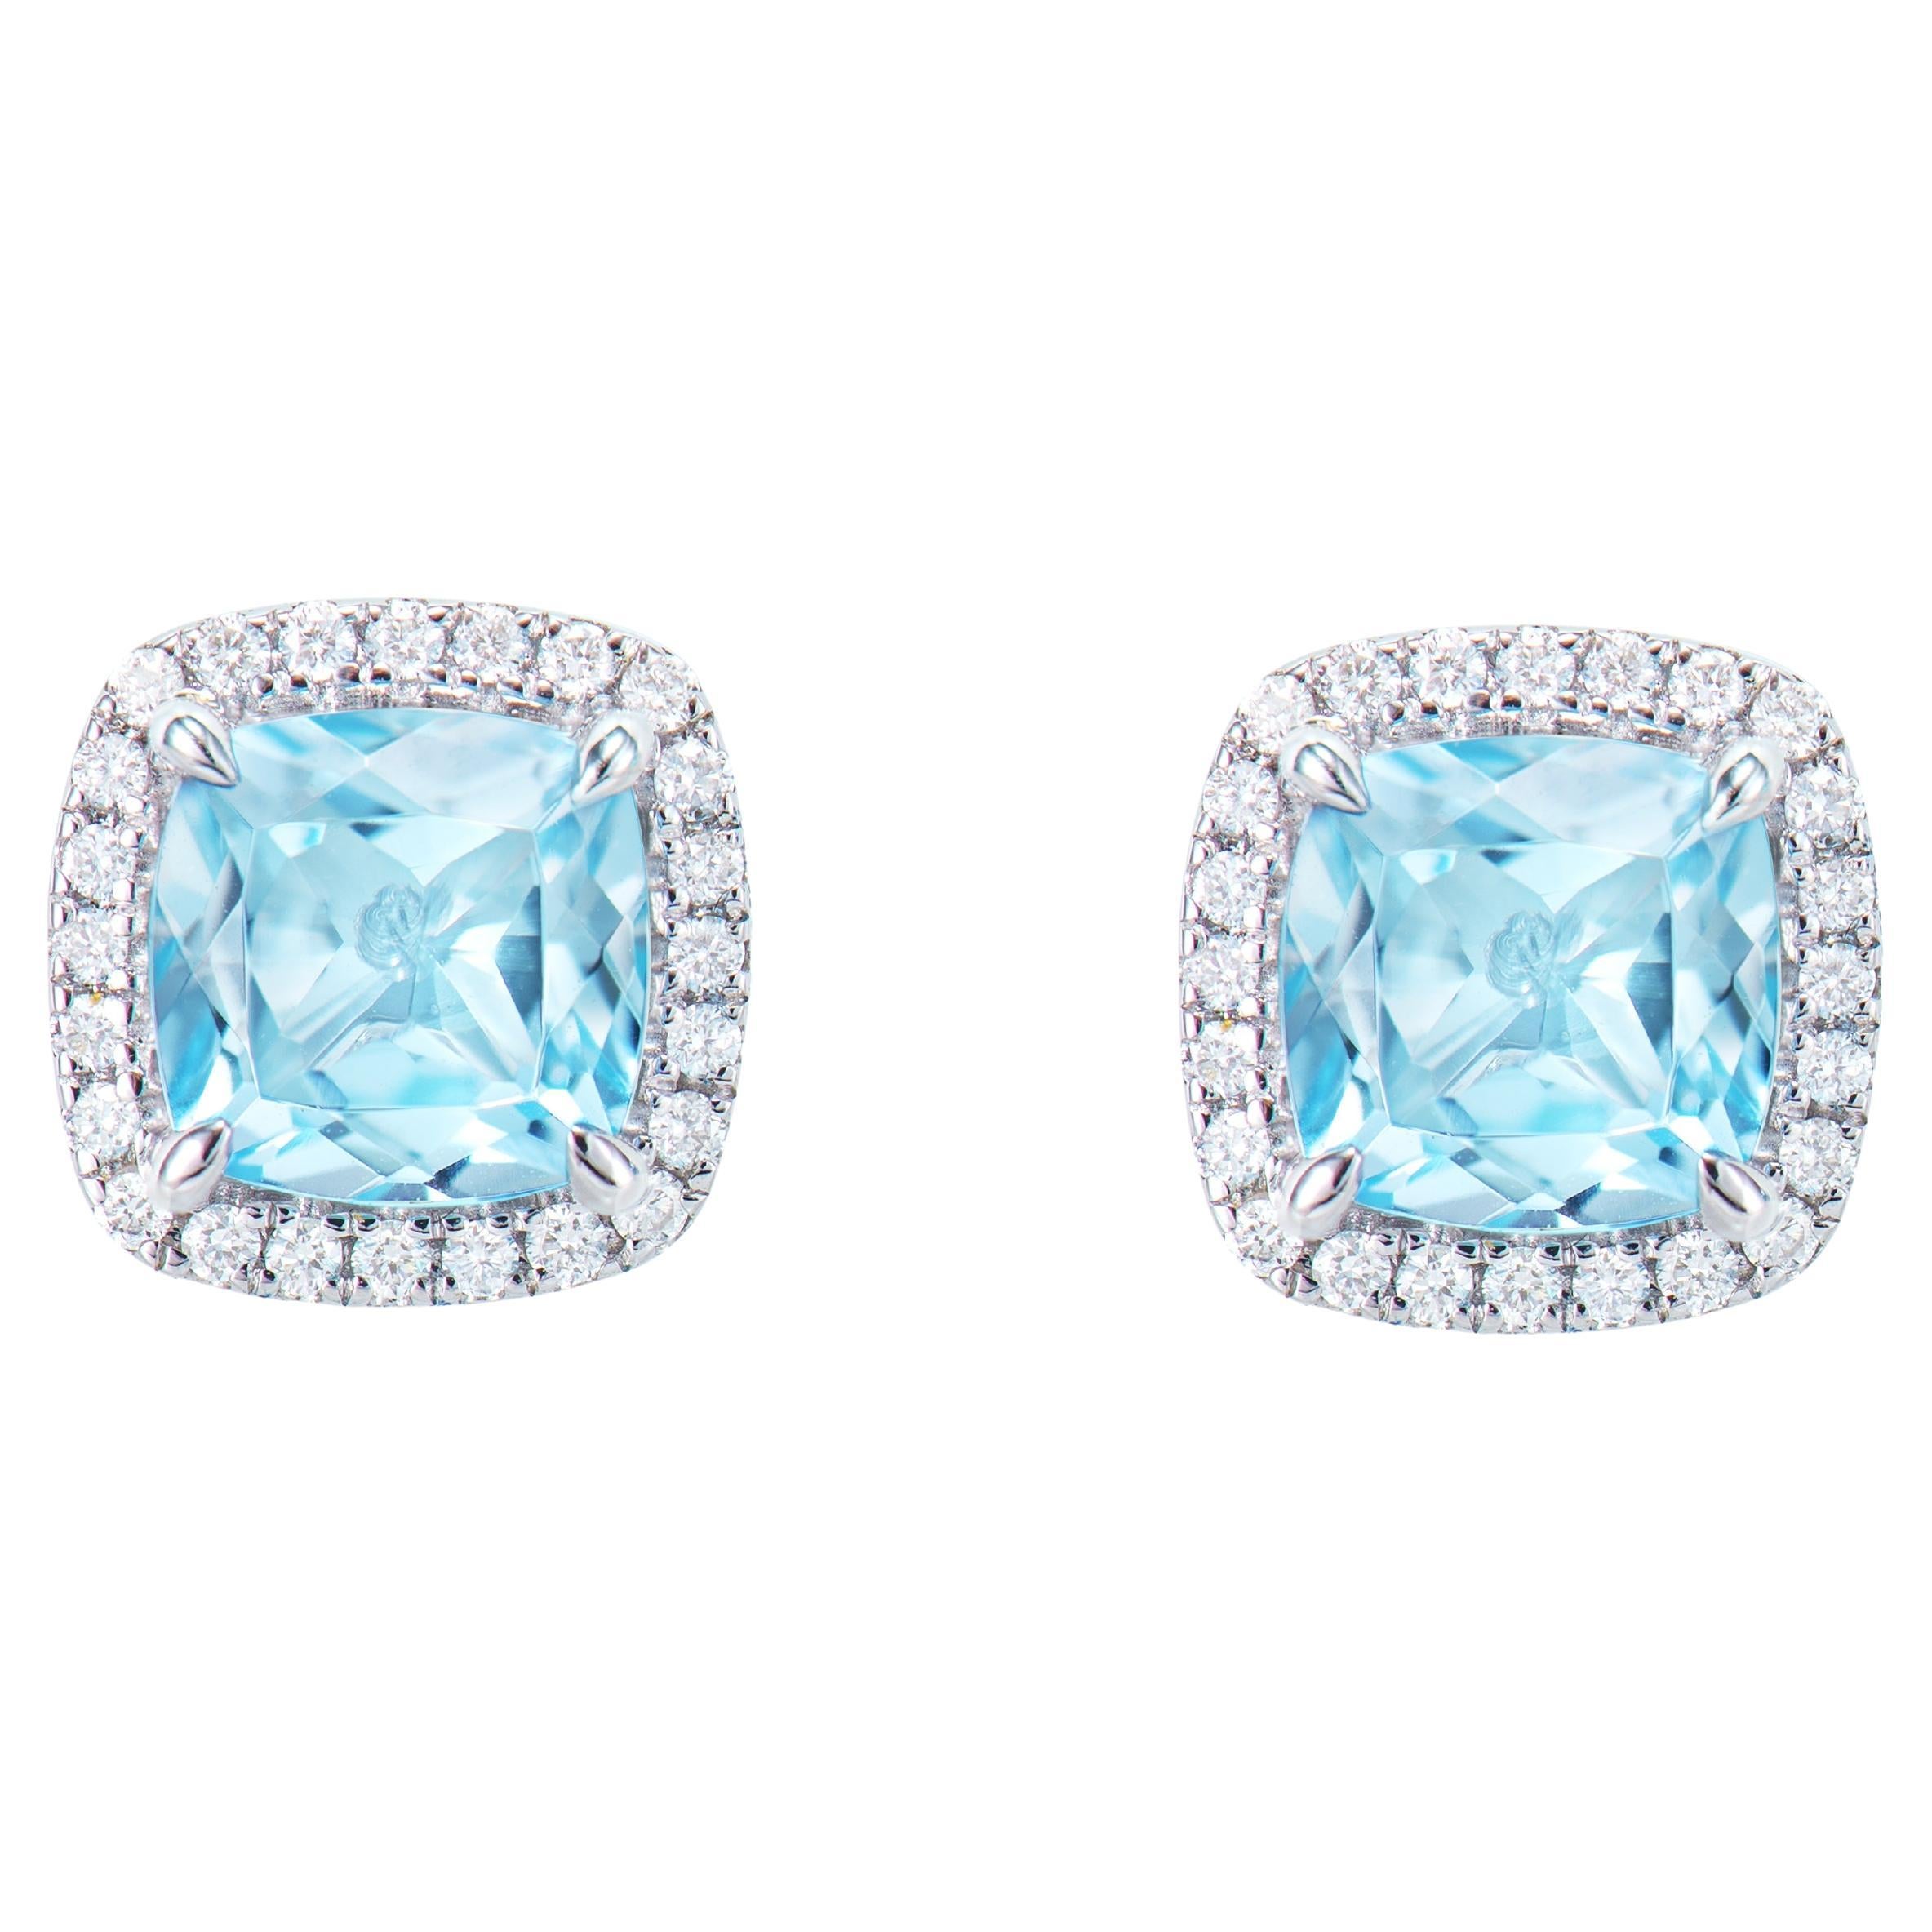 Clous d'oreilles en or 18 carats avec topaze bleu ciel de 2,19 carats et diamant blanc.